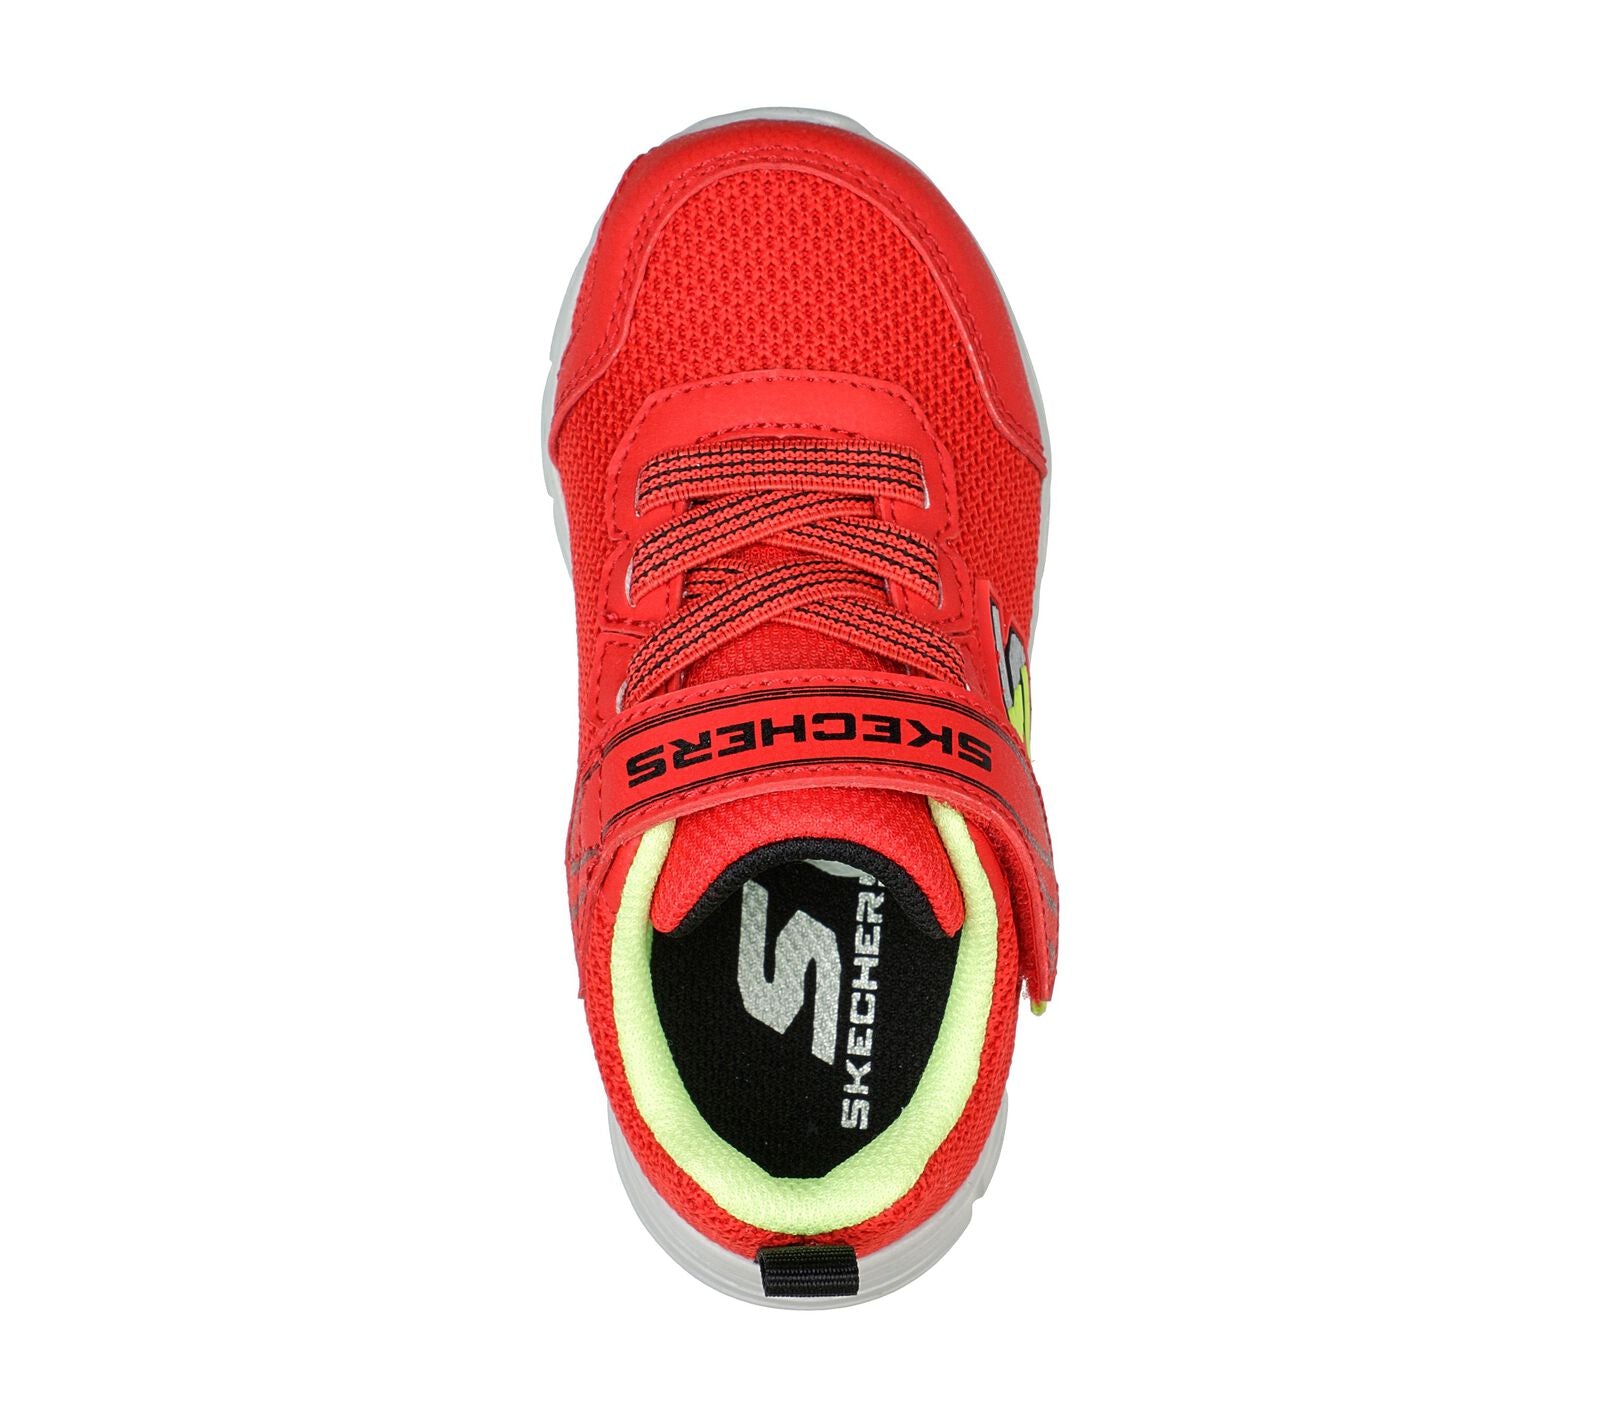 Skechers comfy flex red - Kirbys Footwear Ltd